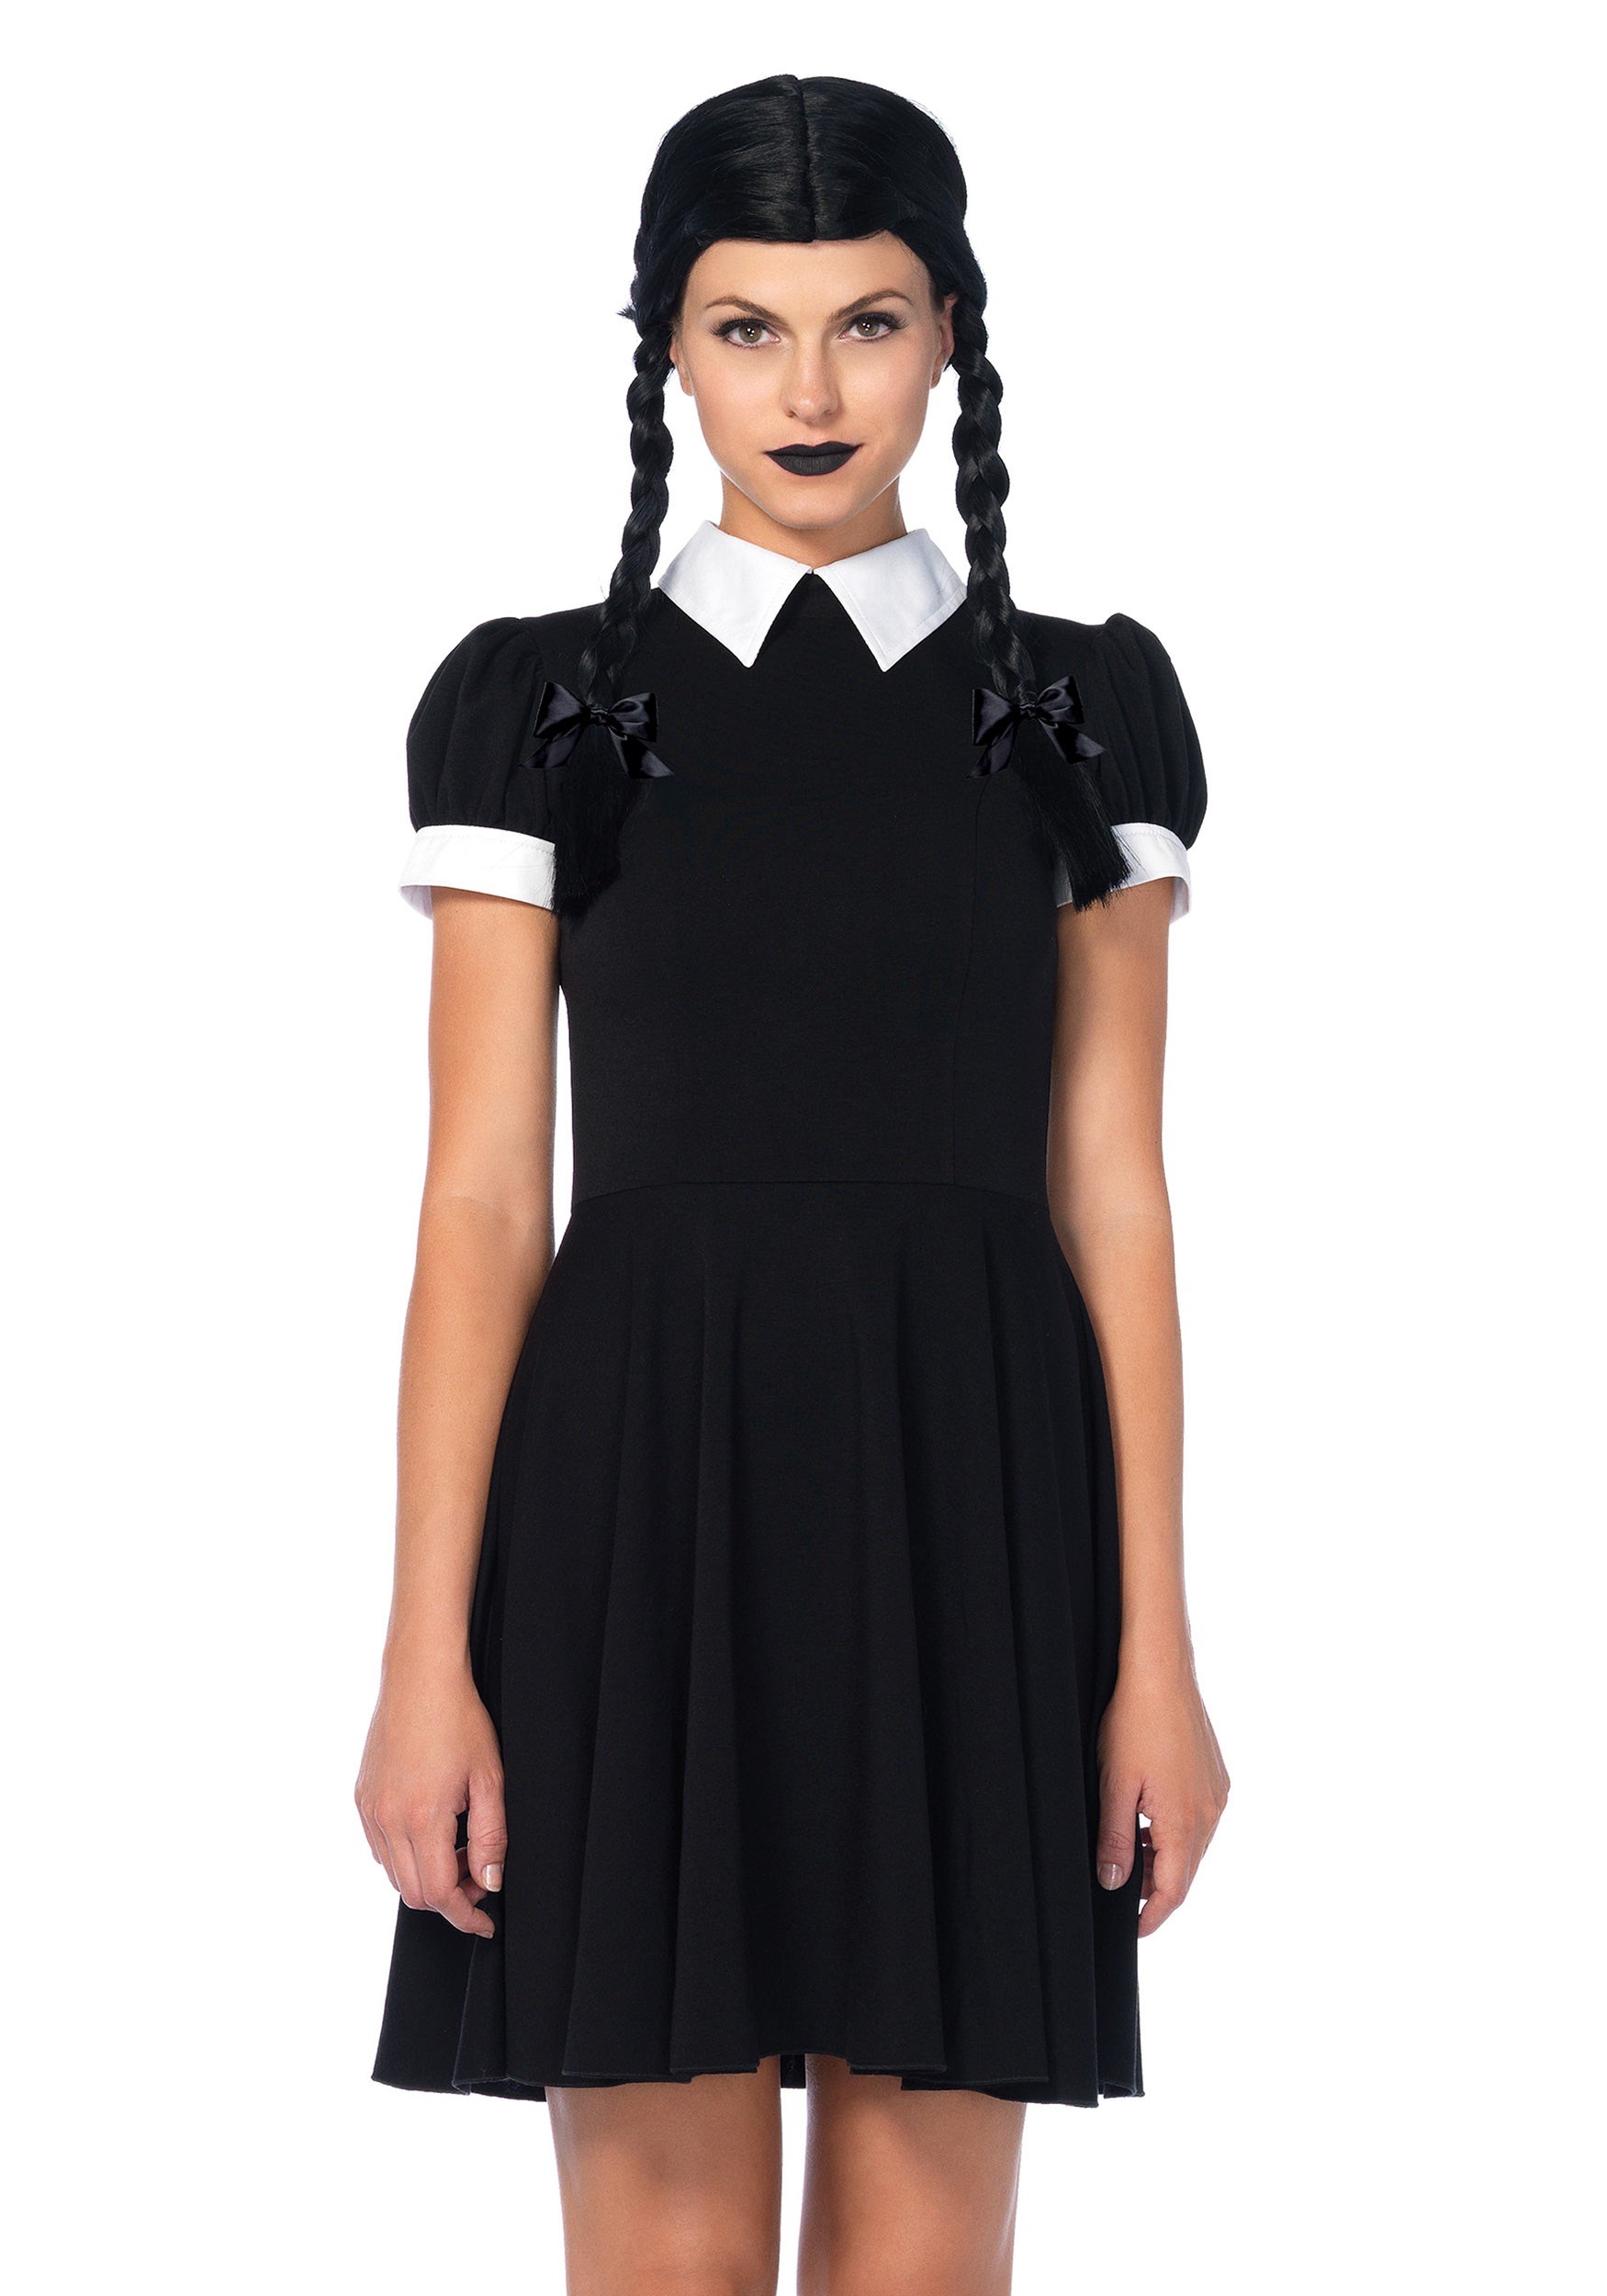 Women’s Gothic Darling Costume